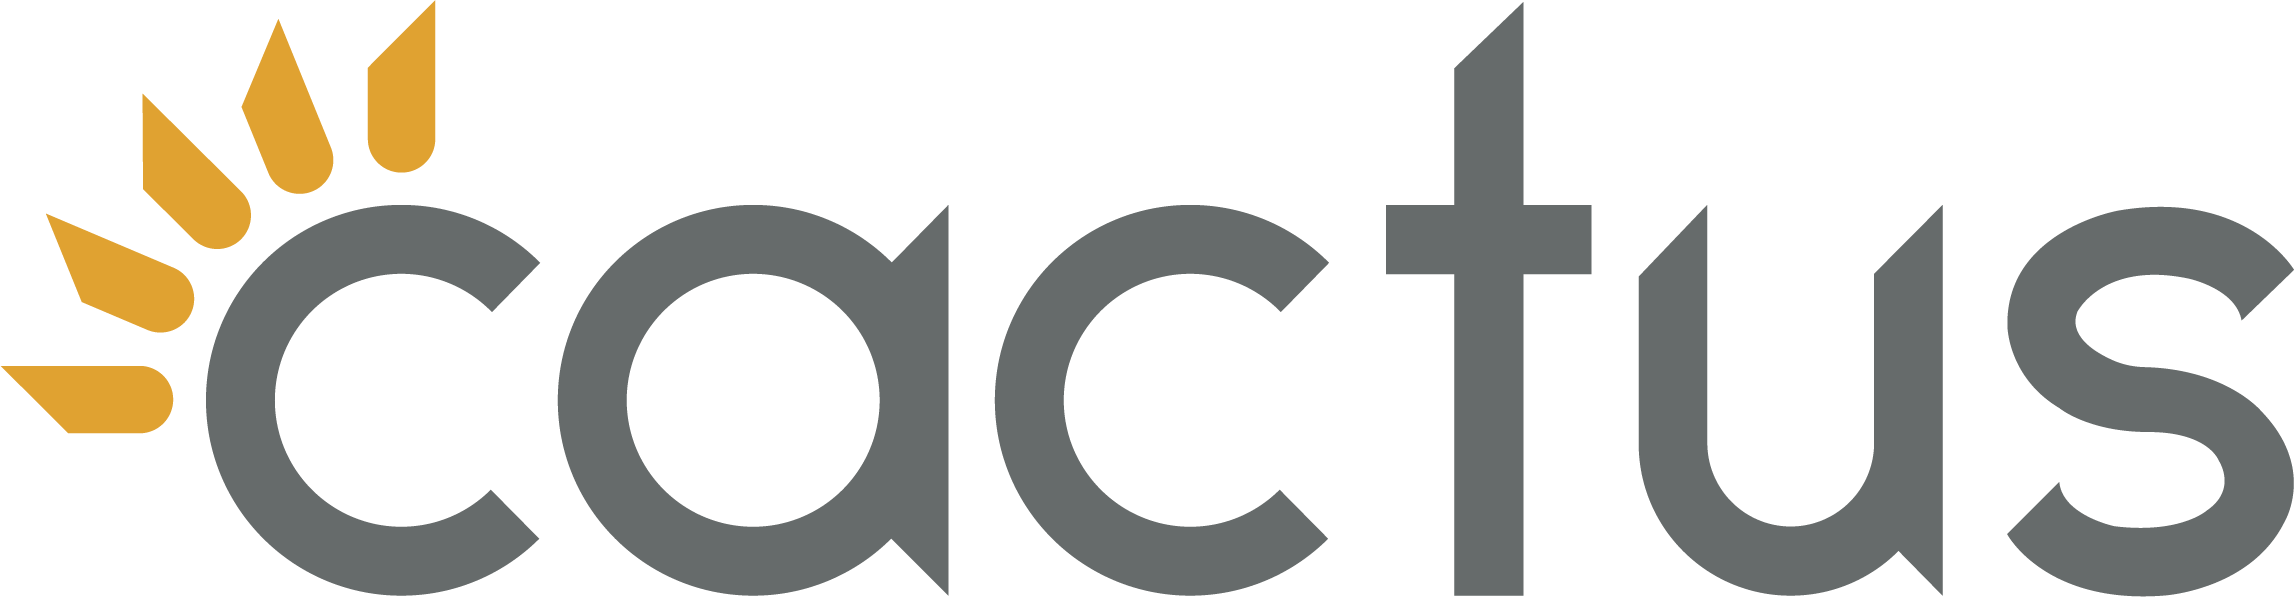 cactus-logo-vector-grey